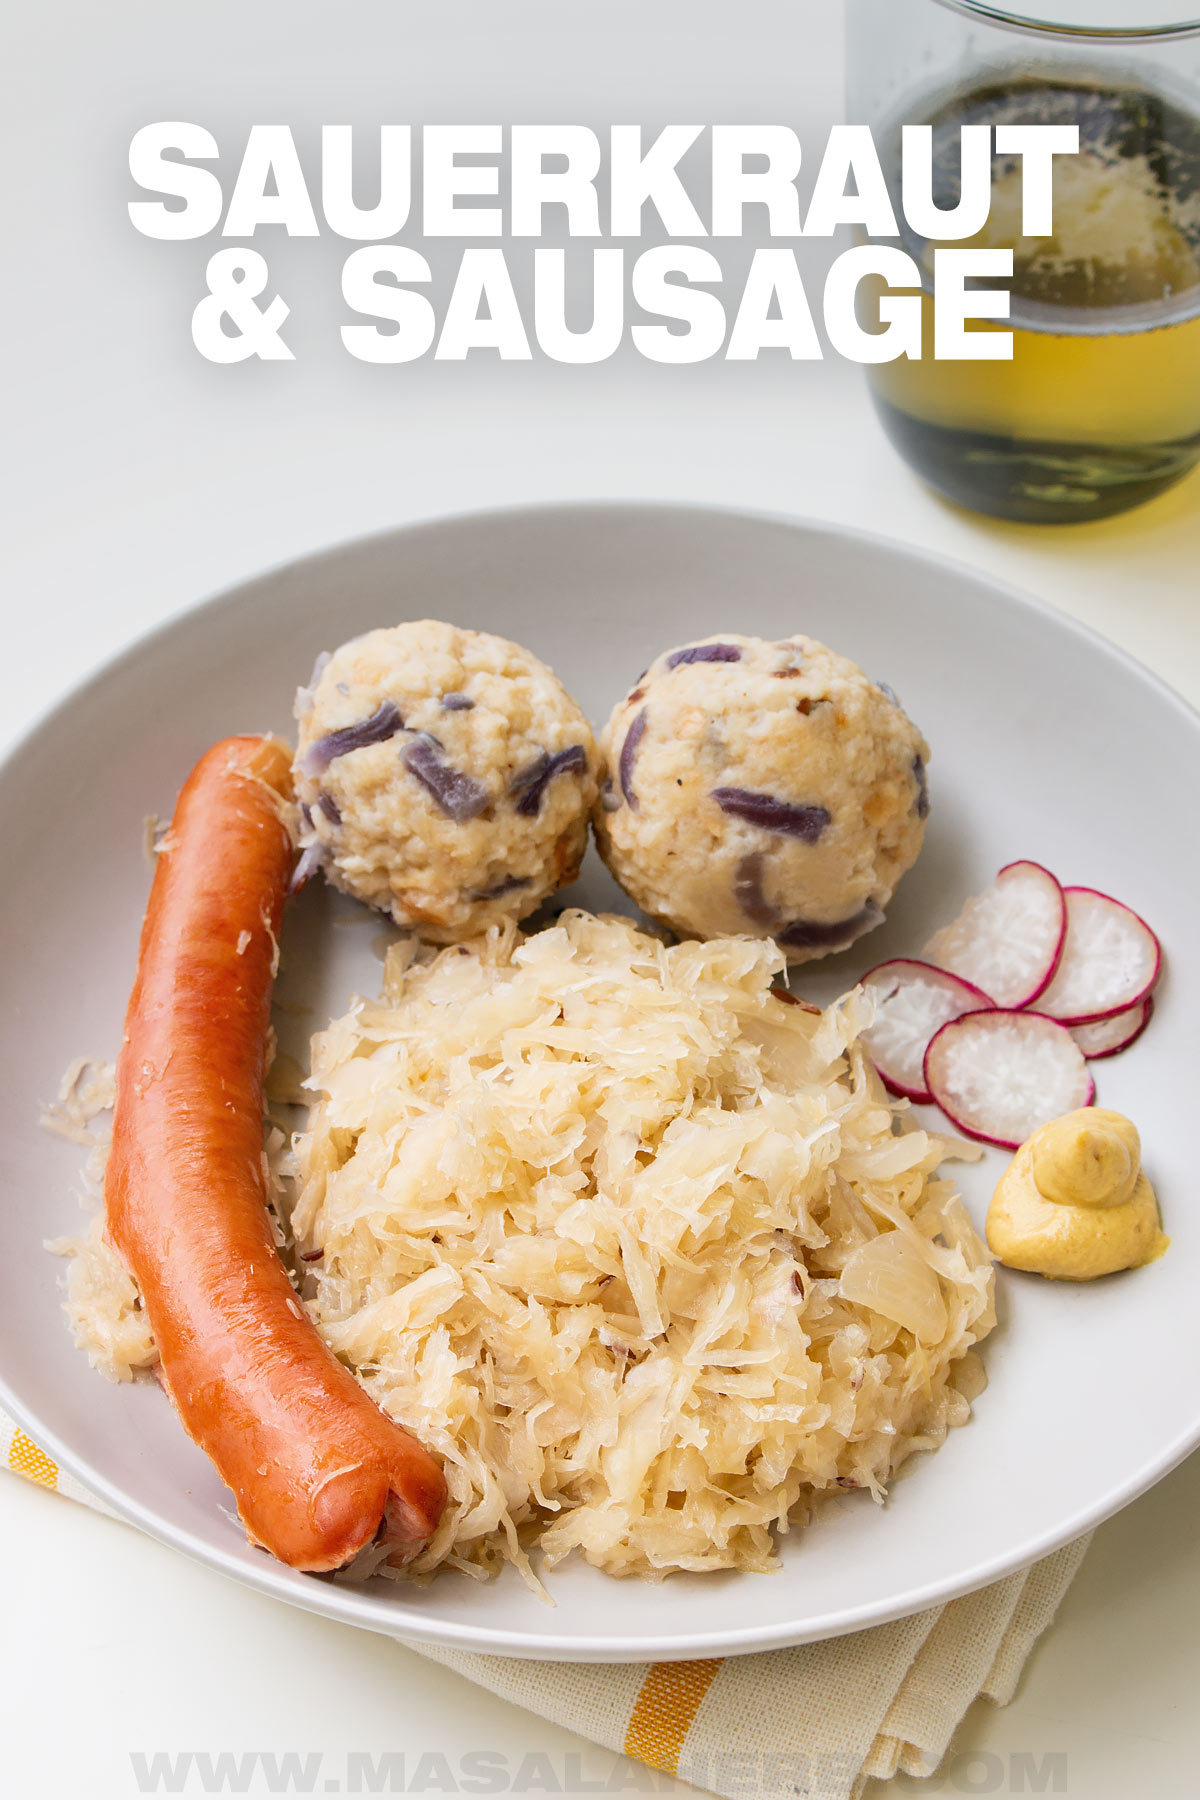 Bavarian Sauerkraut and Sausage Recipe pin cover